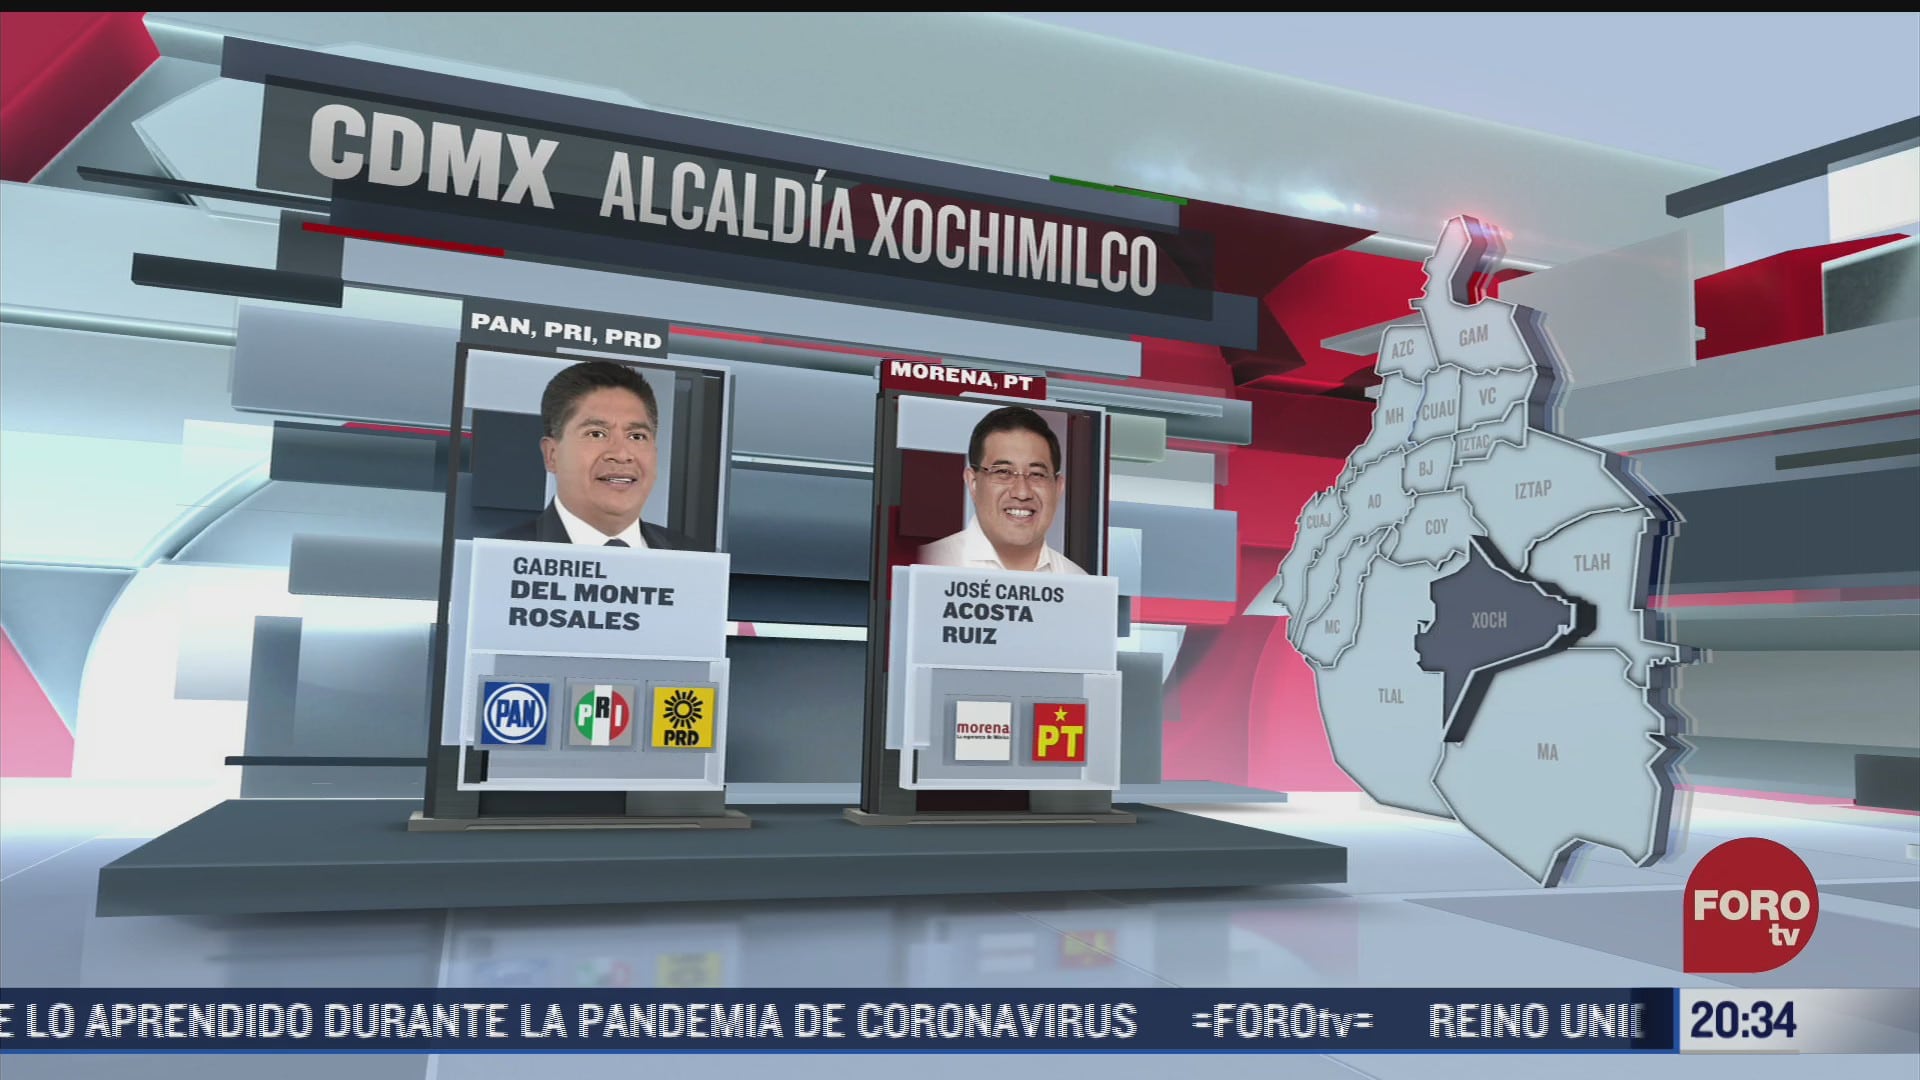 gabriel del monte impugna eleccion en xochimilco